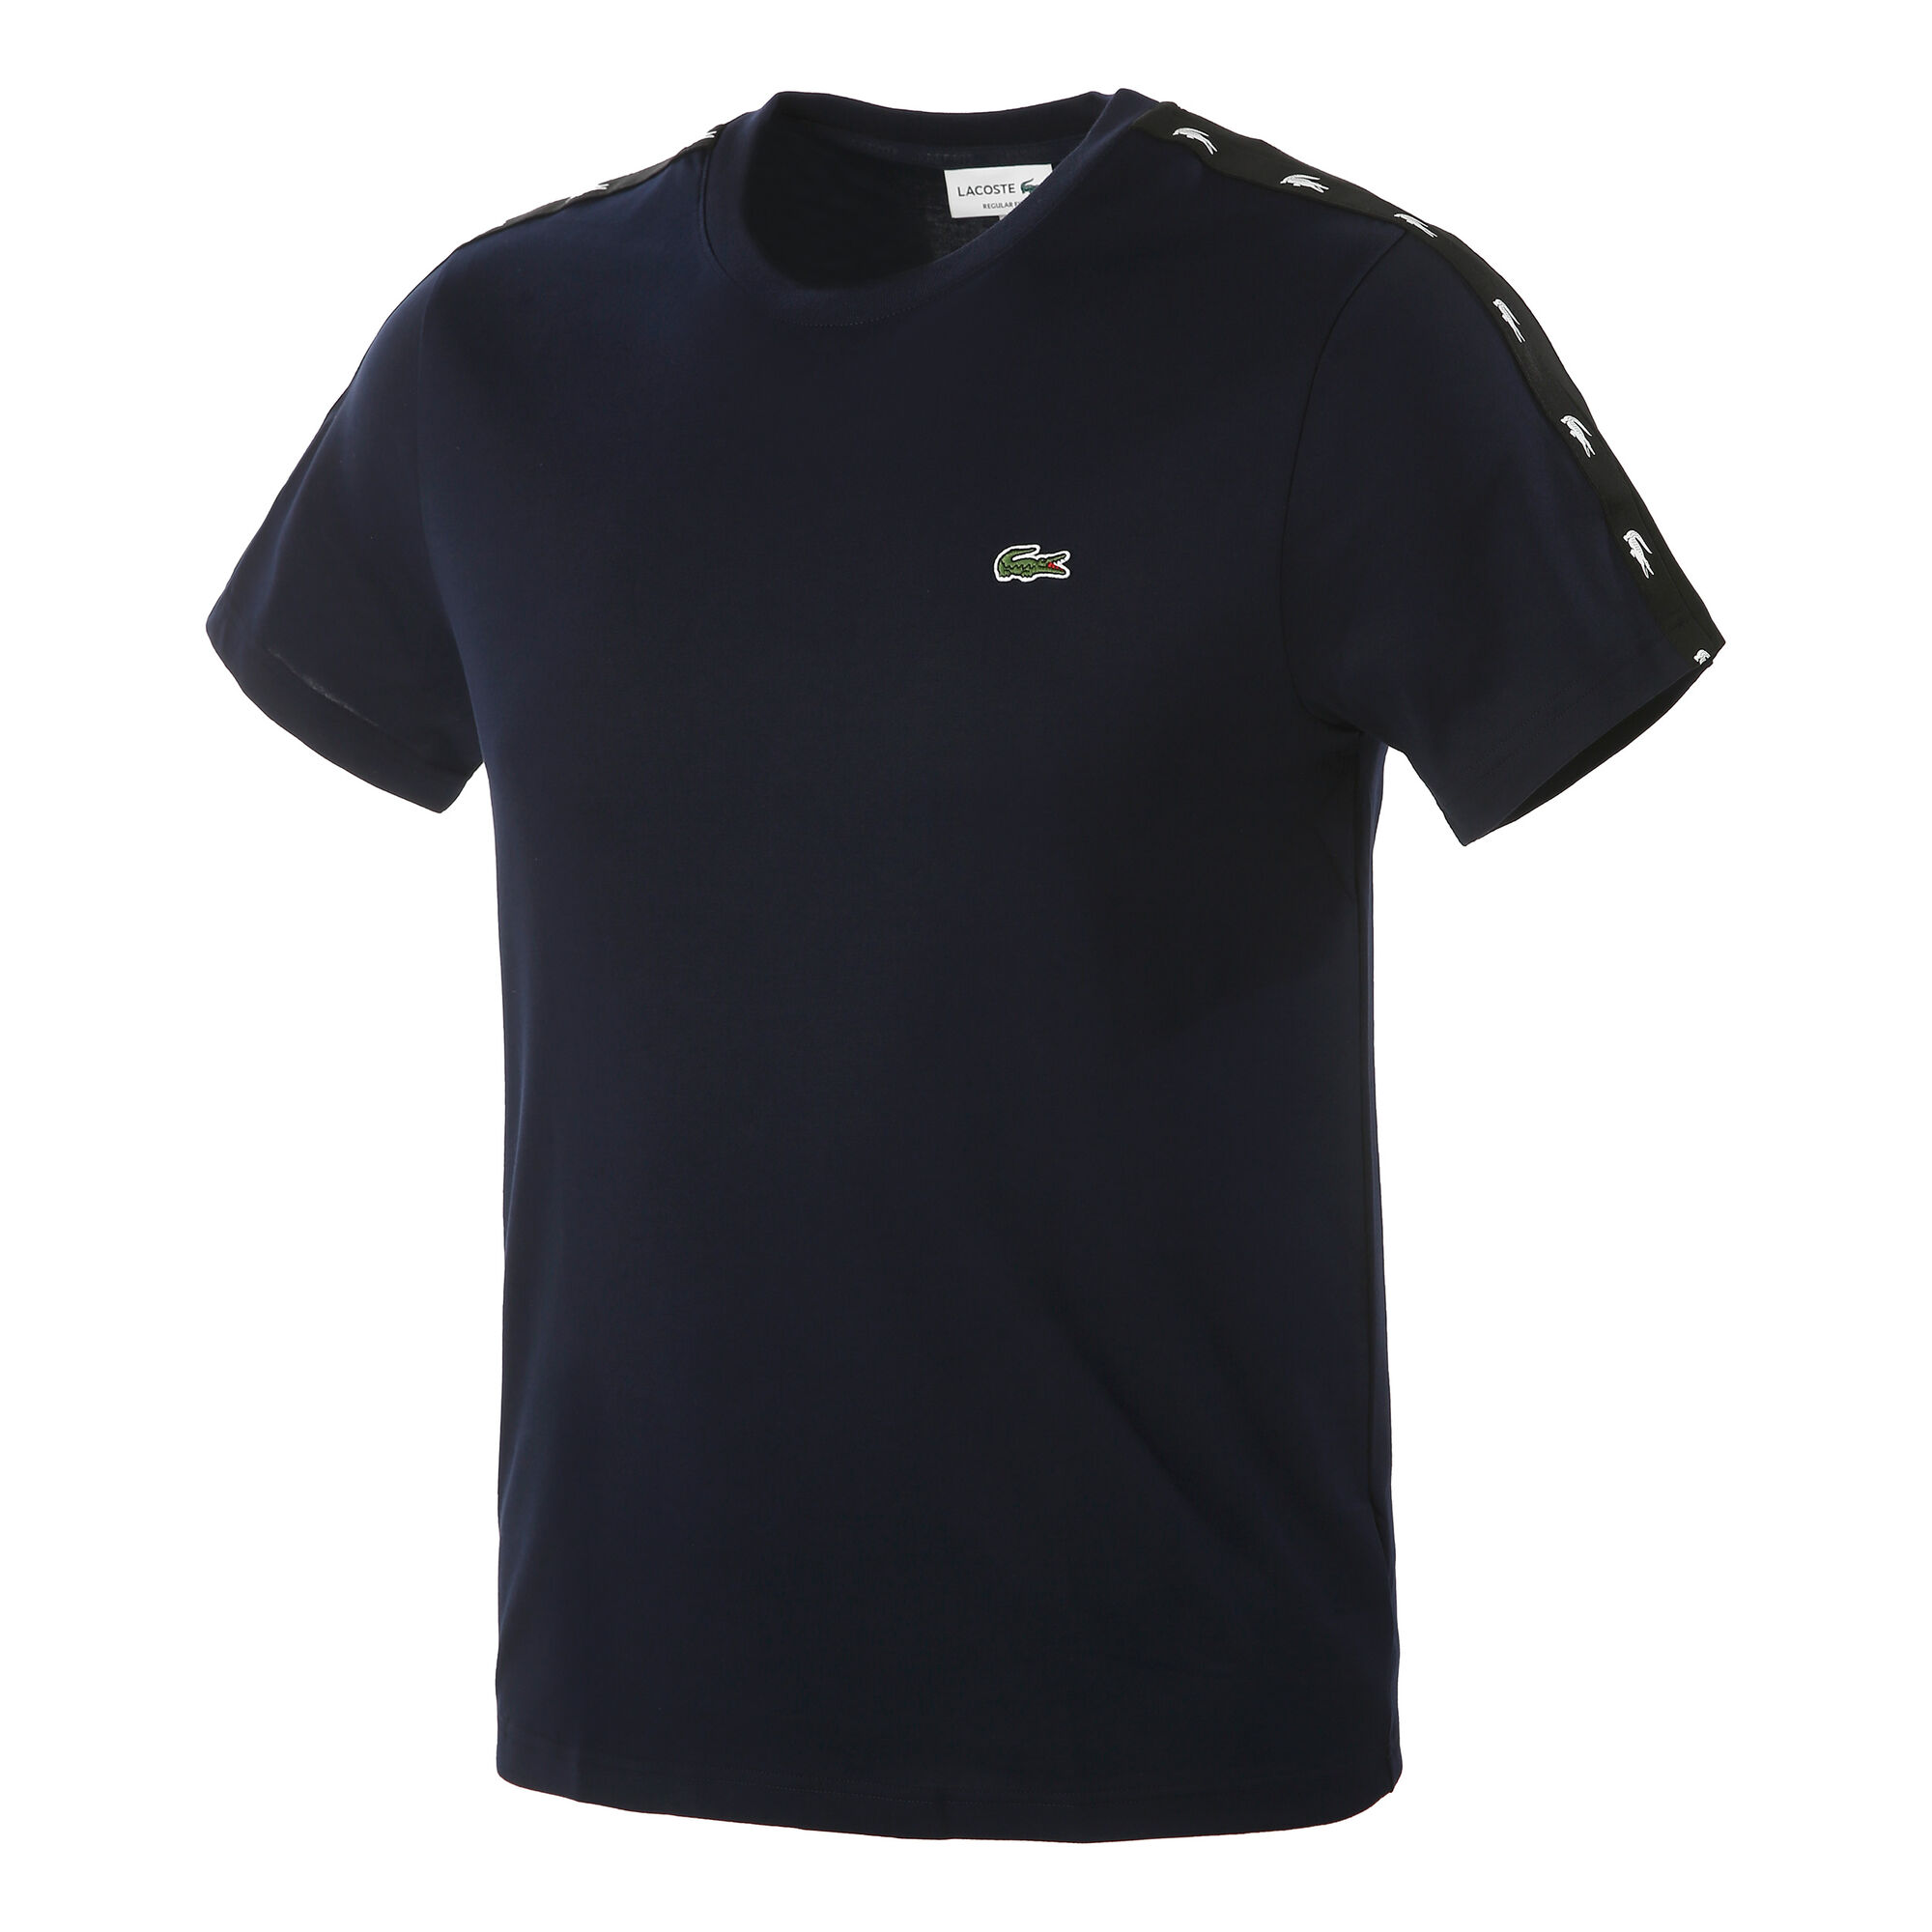 buy Lacoste T-Shirt Men - Dark Blue, Black online | Tennis-Point